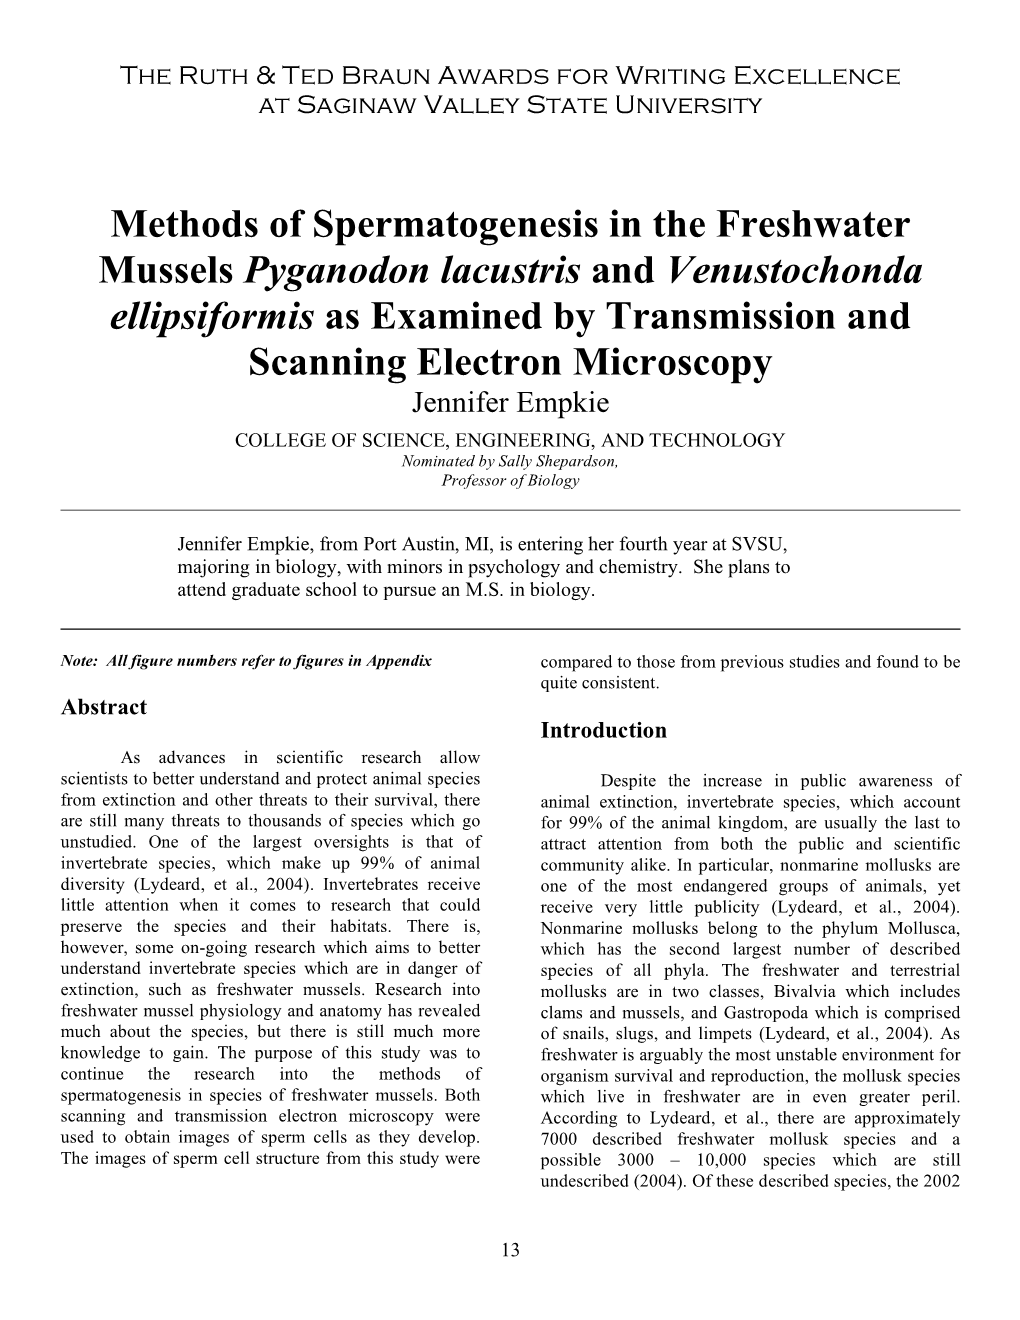 Methods of Spermatogenesis in the Freshwater Mussels Pyganodon